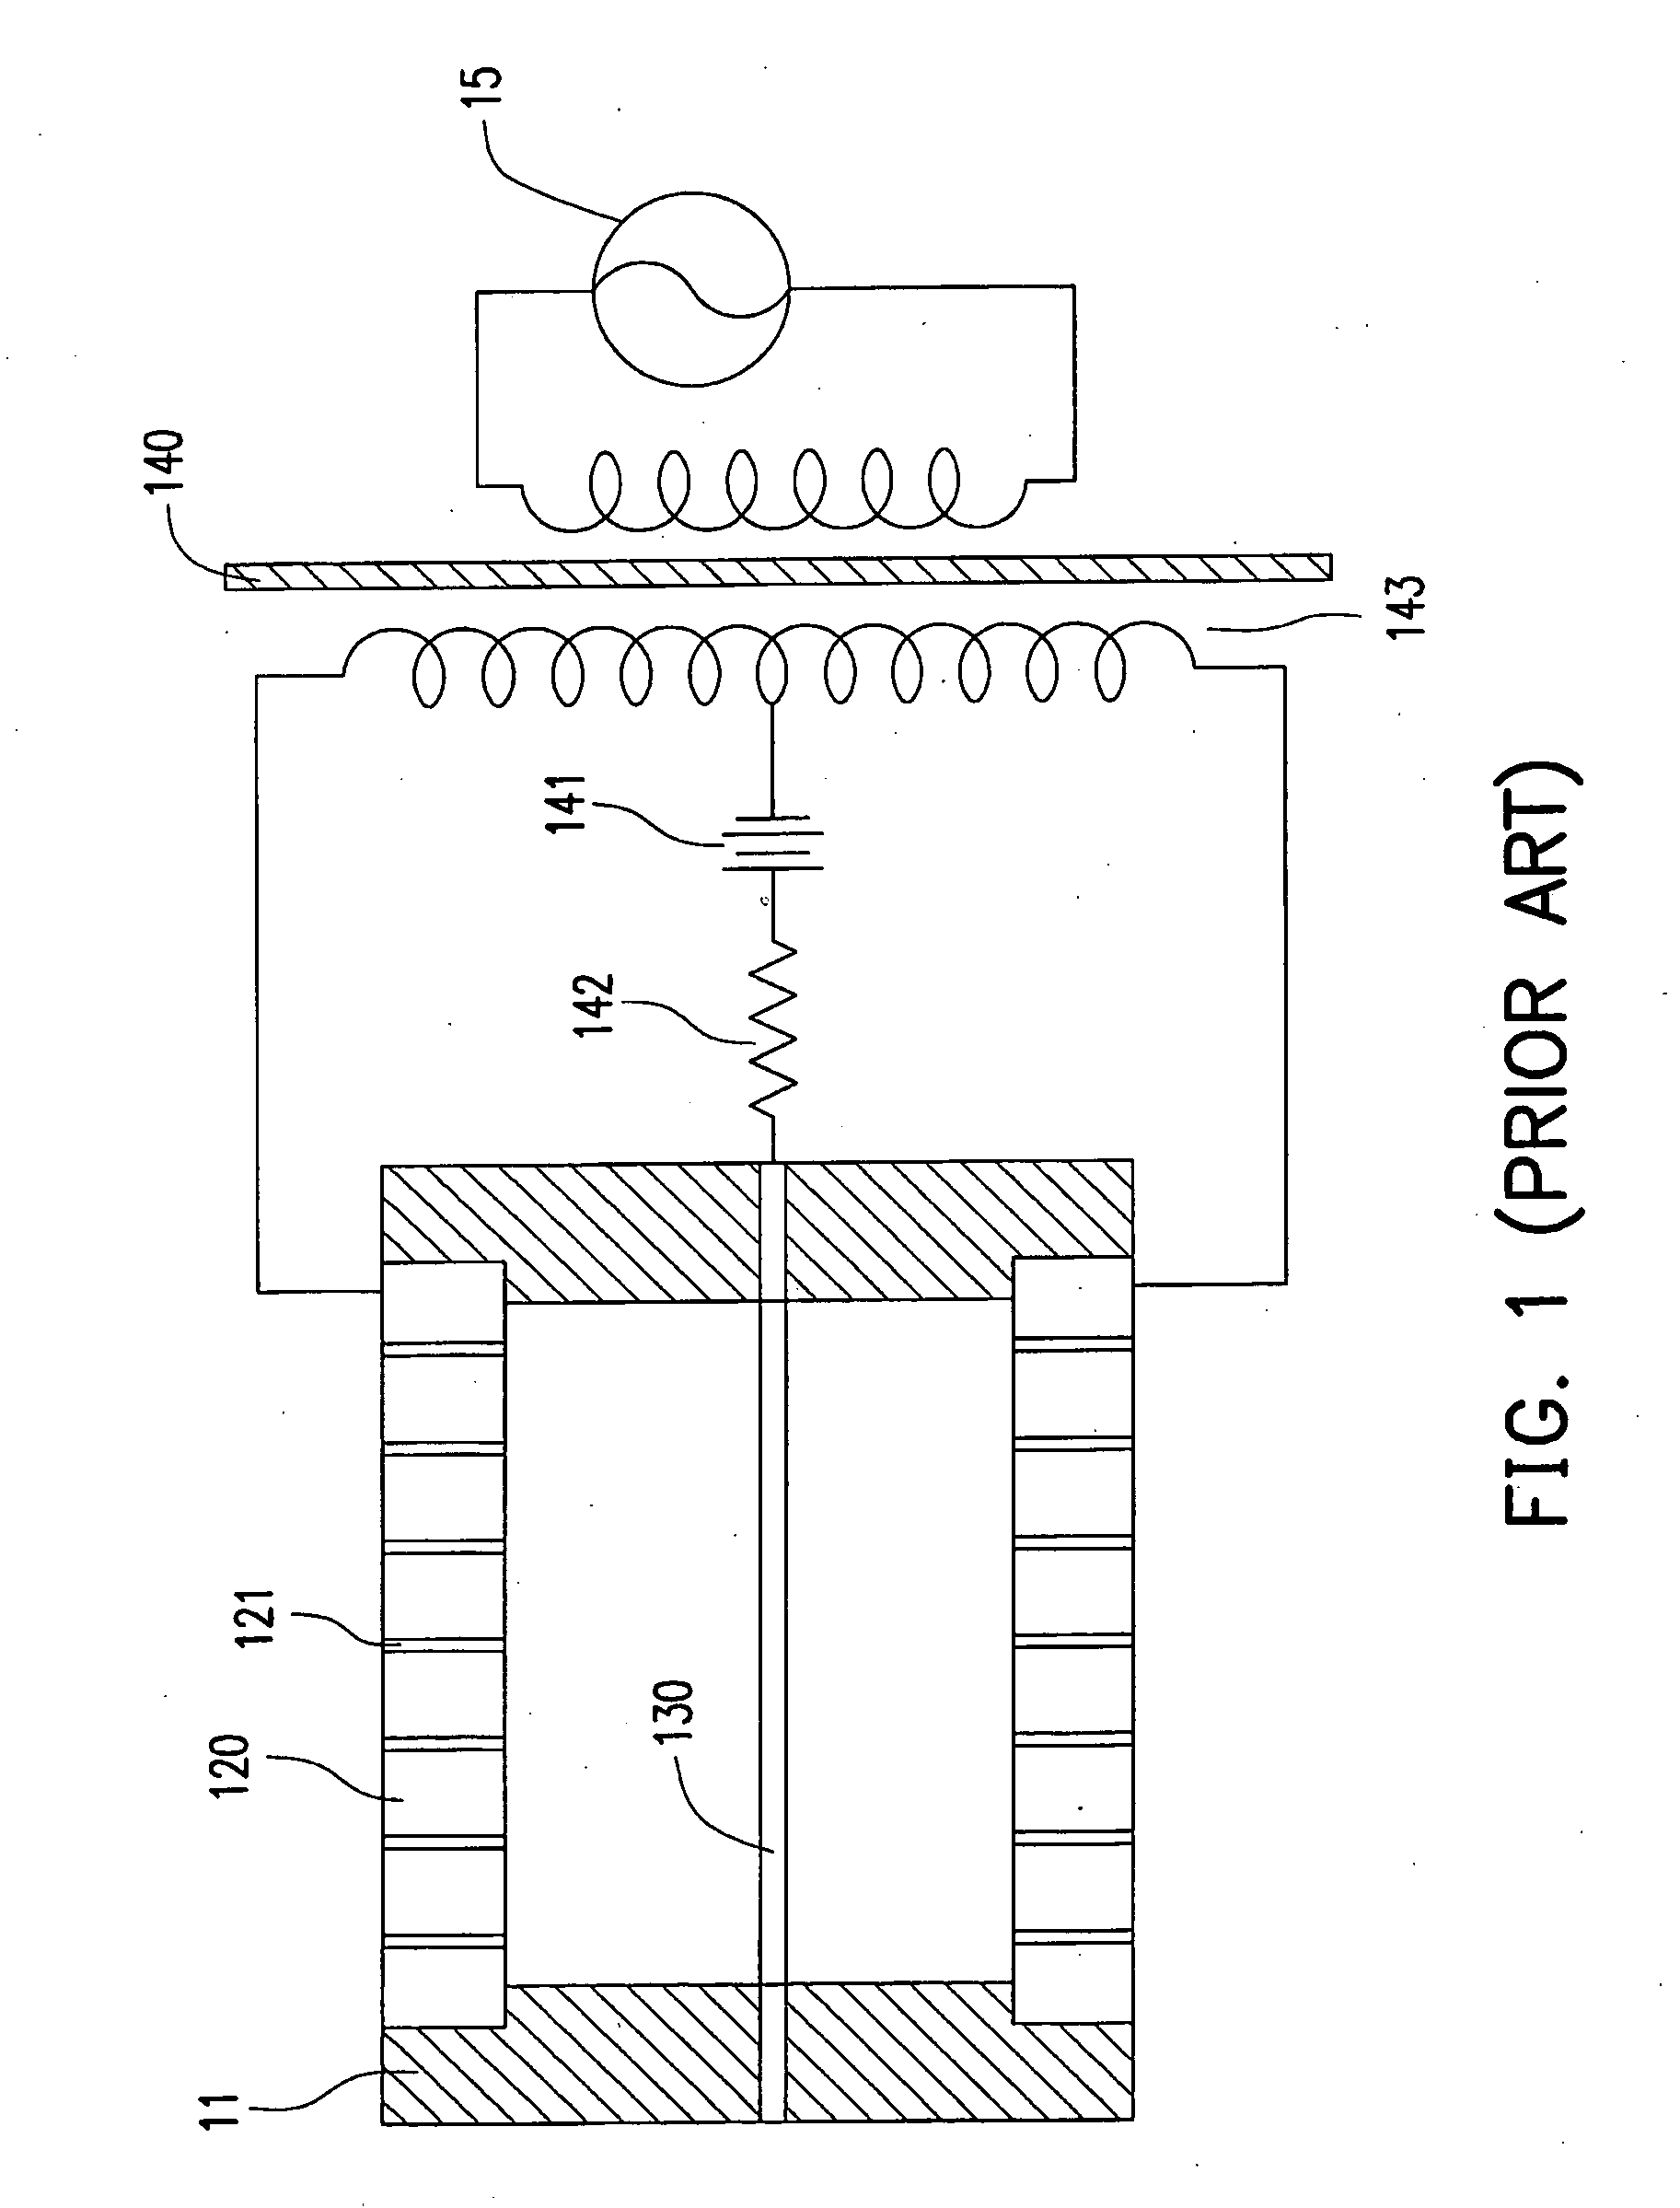 Structure and manufactruring method of electrostatic speaker